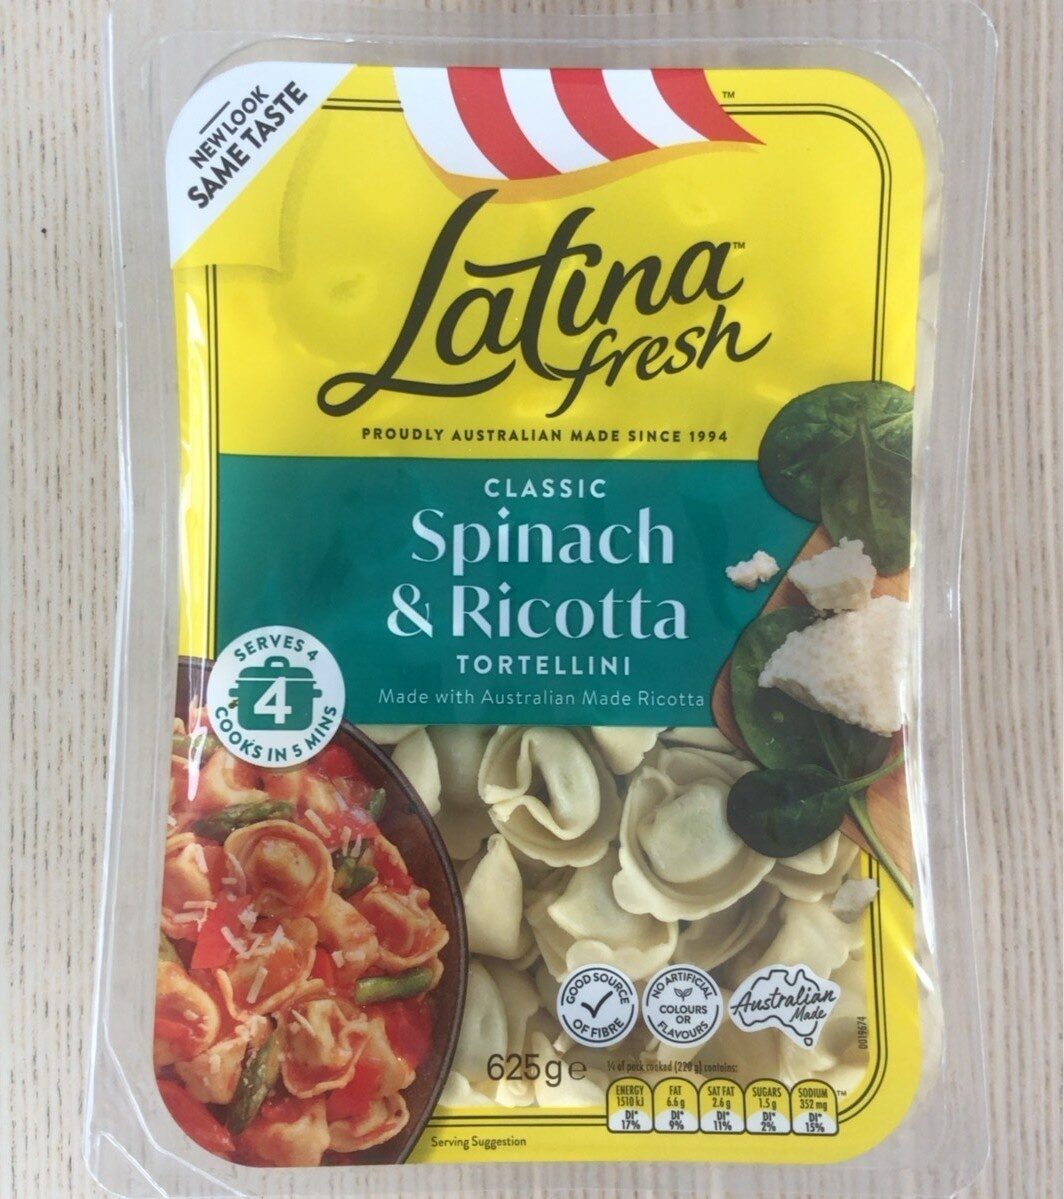 Latina fresh classic spinach & ricotta - Producto - en